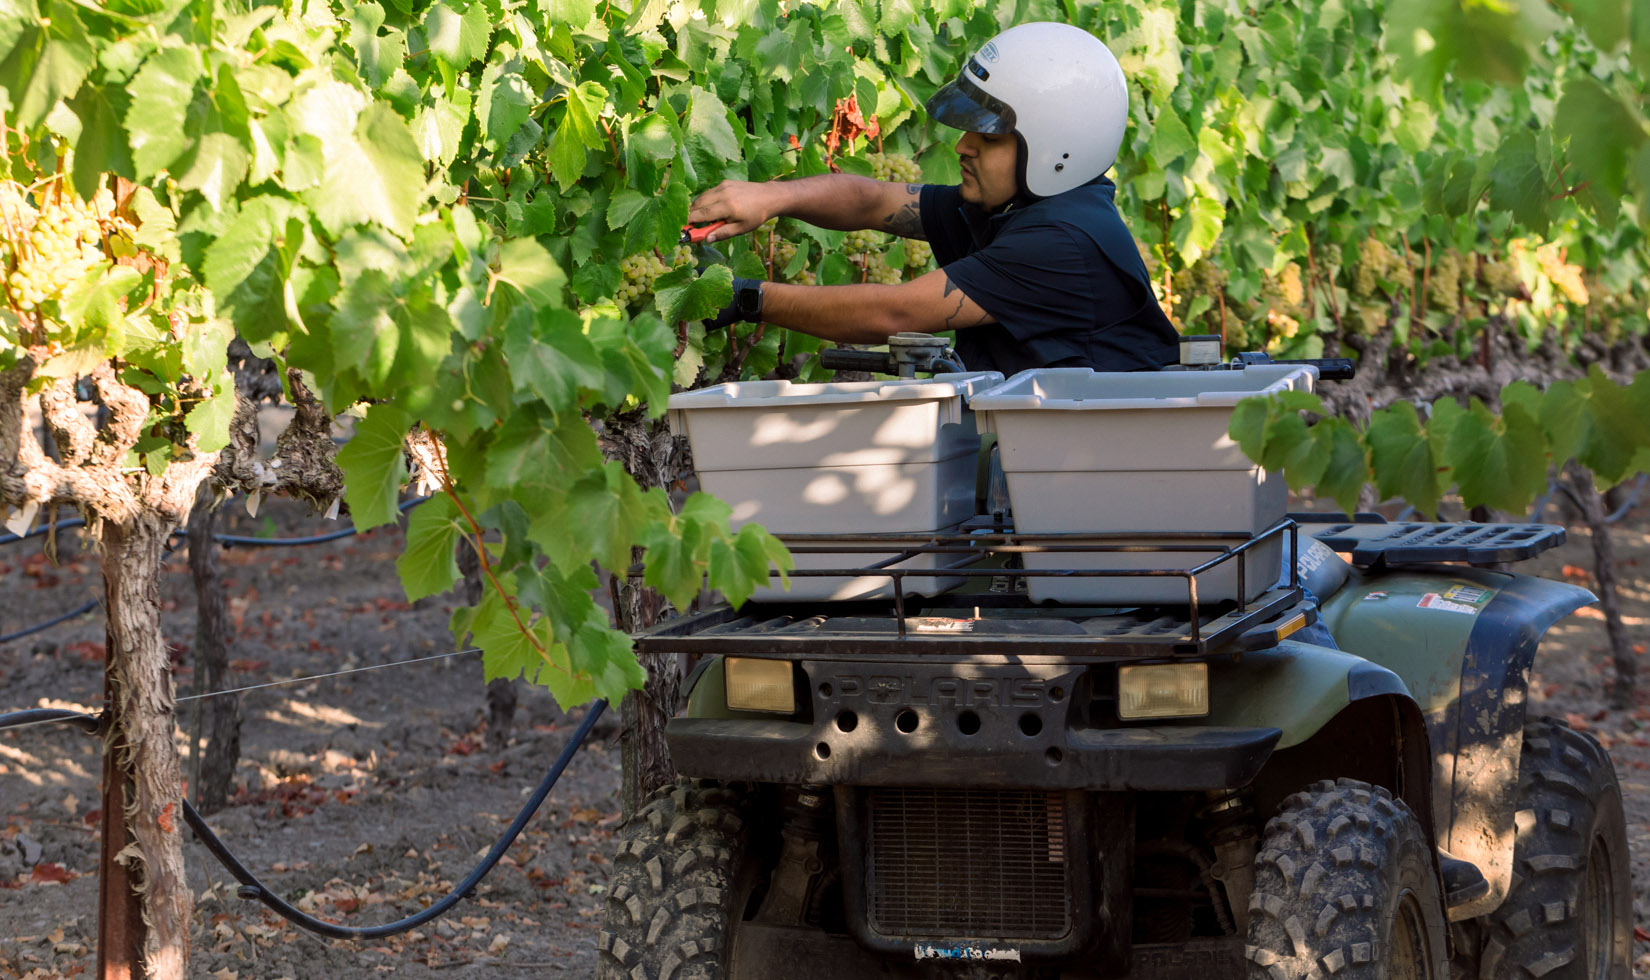 Jordan Winery employee on ATV taking chardonnay grape samples